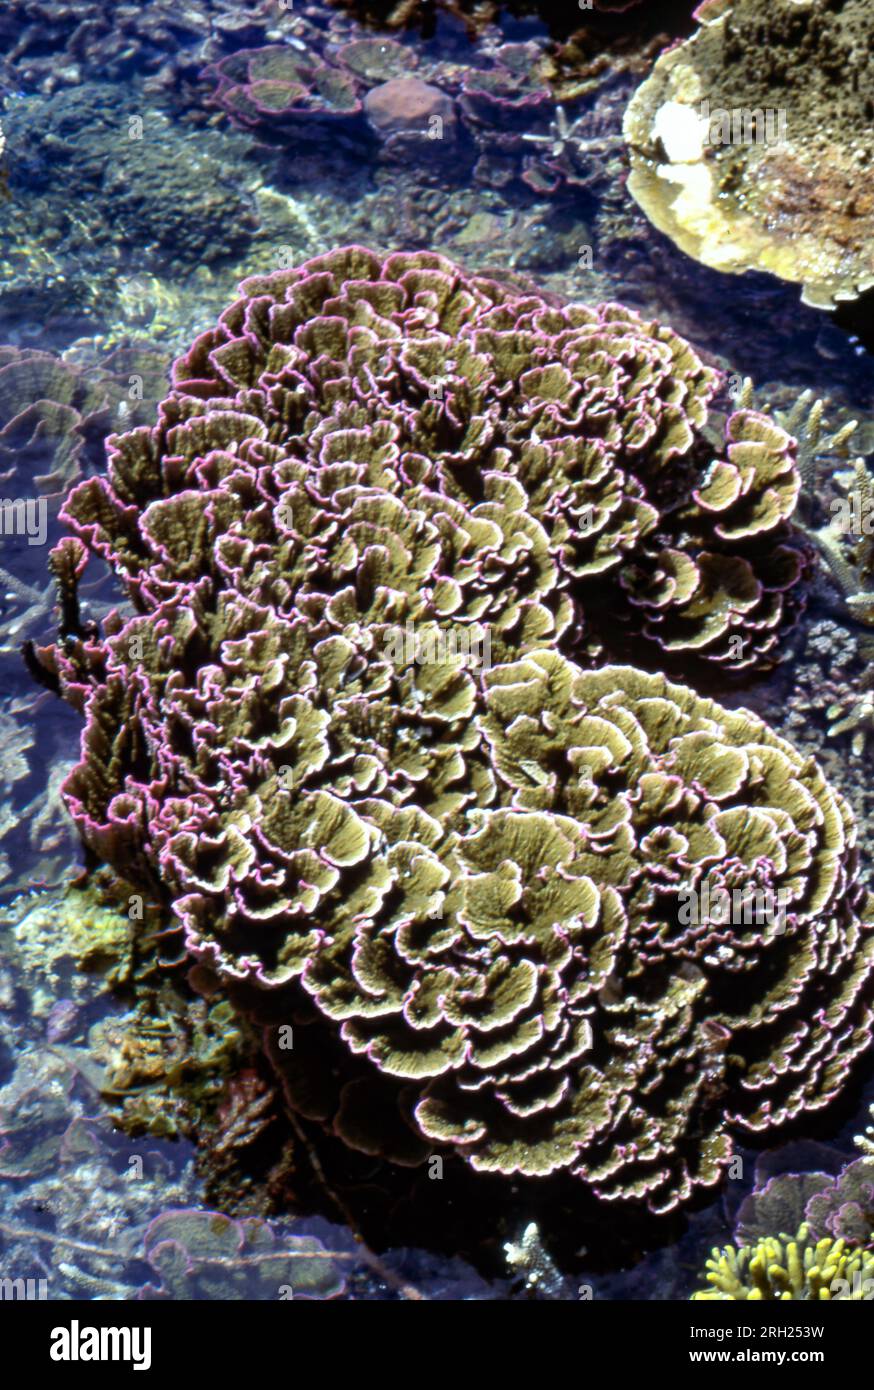 Merulina ampilata from the shallow reef of Bunaken, North Sulawesi, Indonesia. Stock Photo